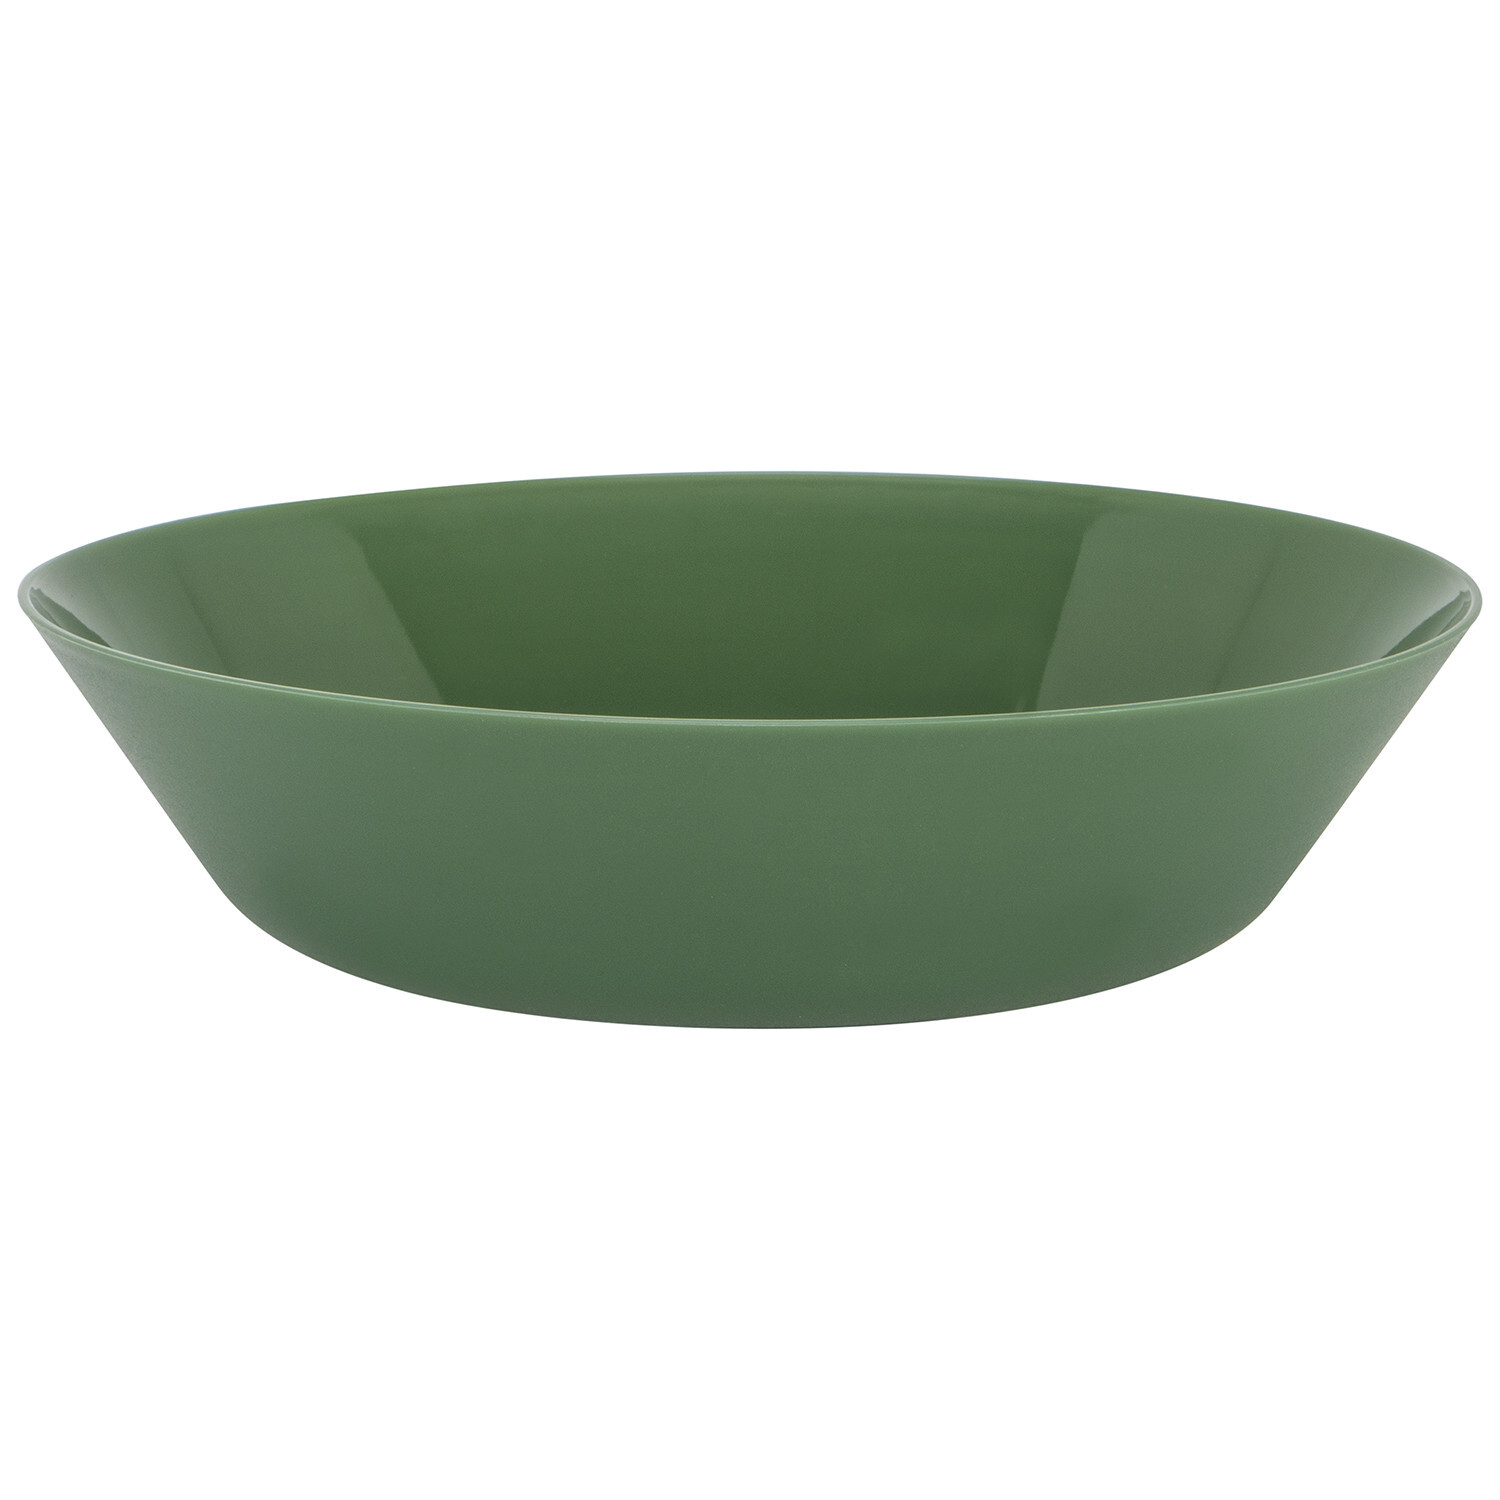 Plastic Picnic Bowl - Green Image